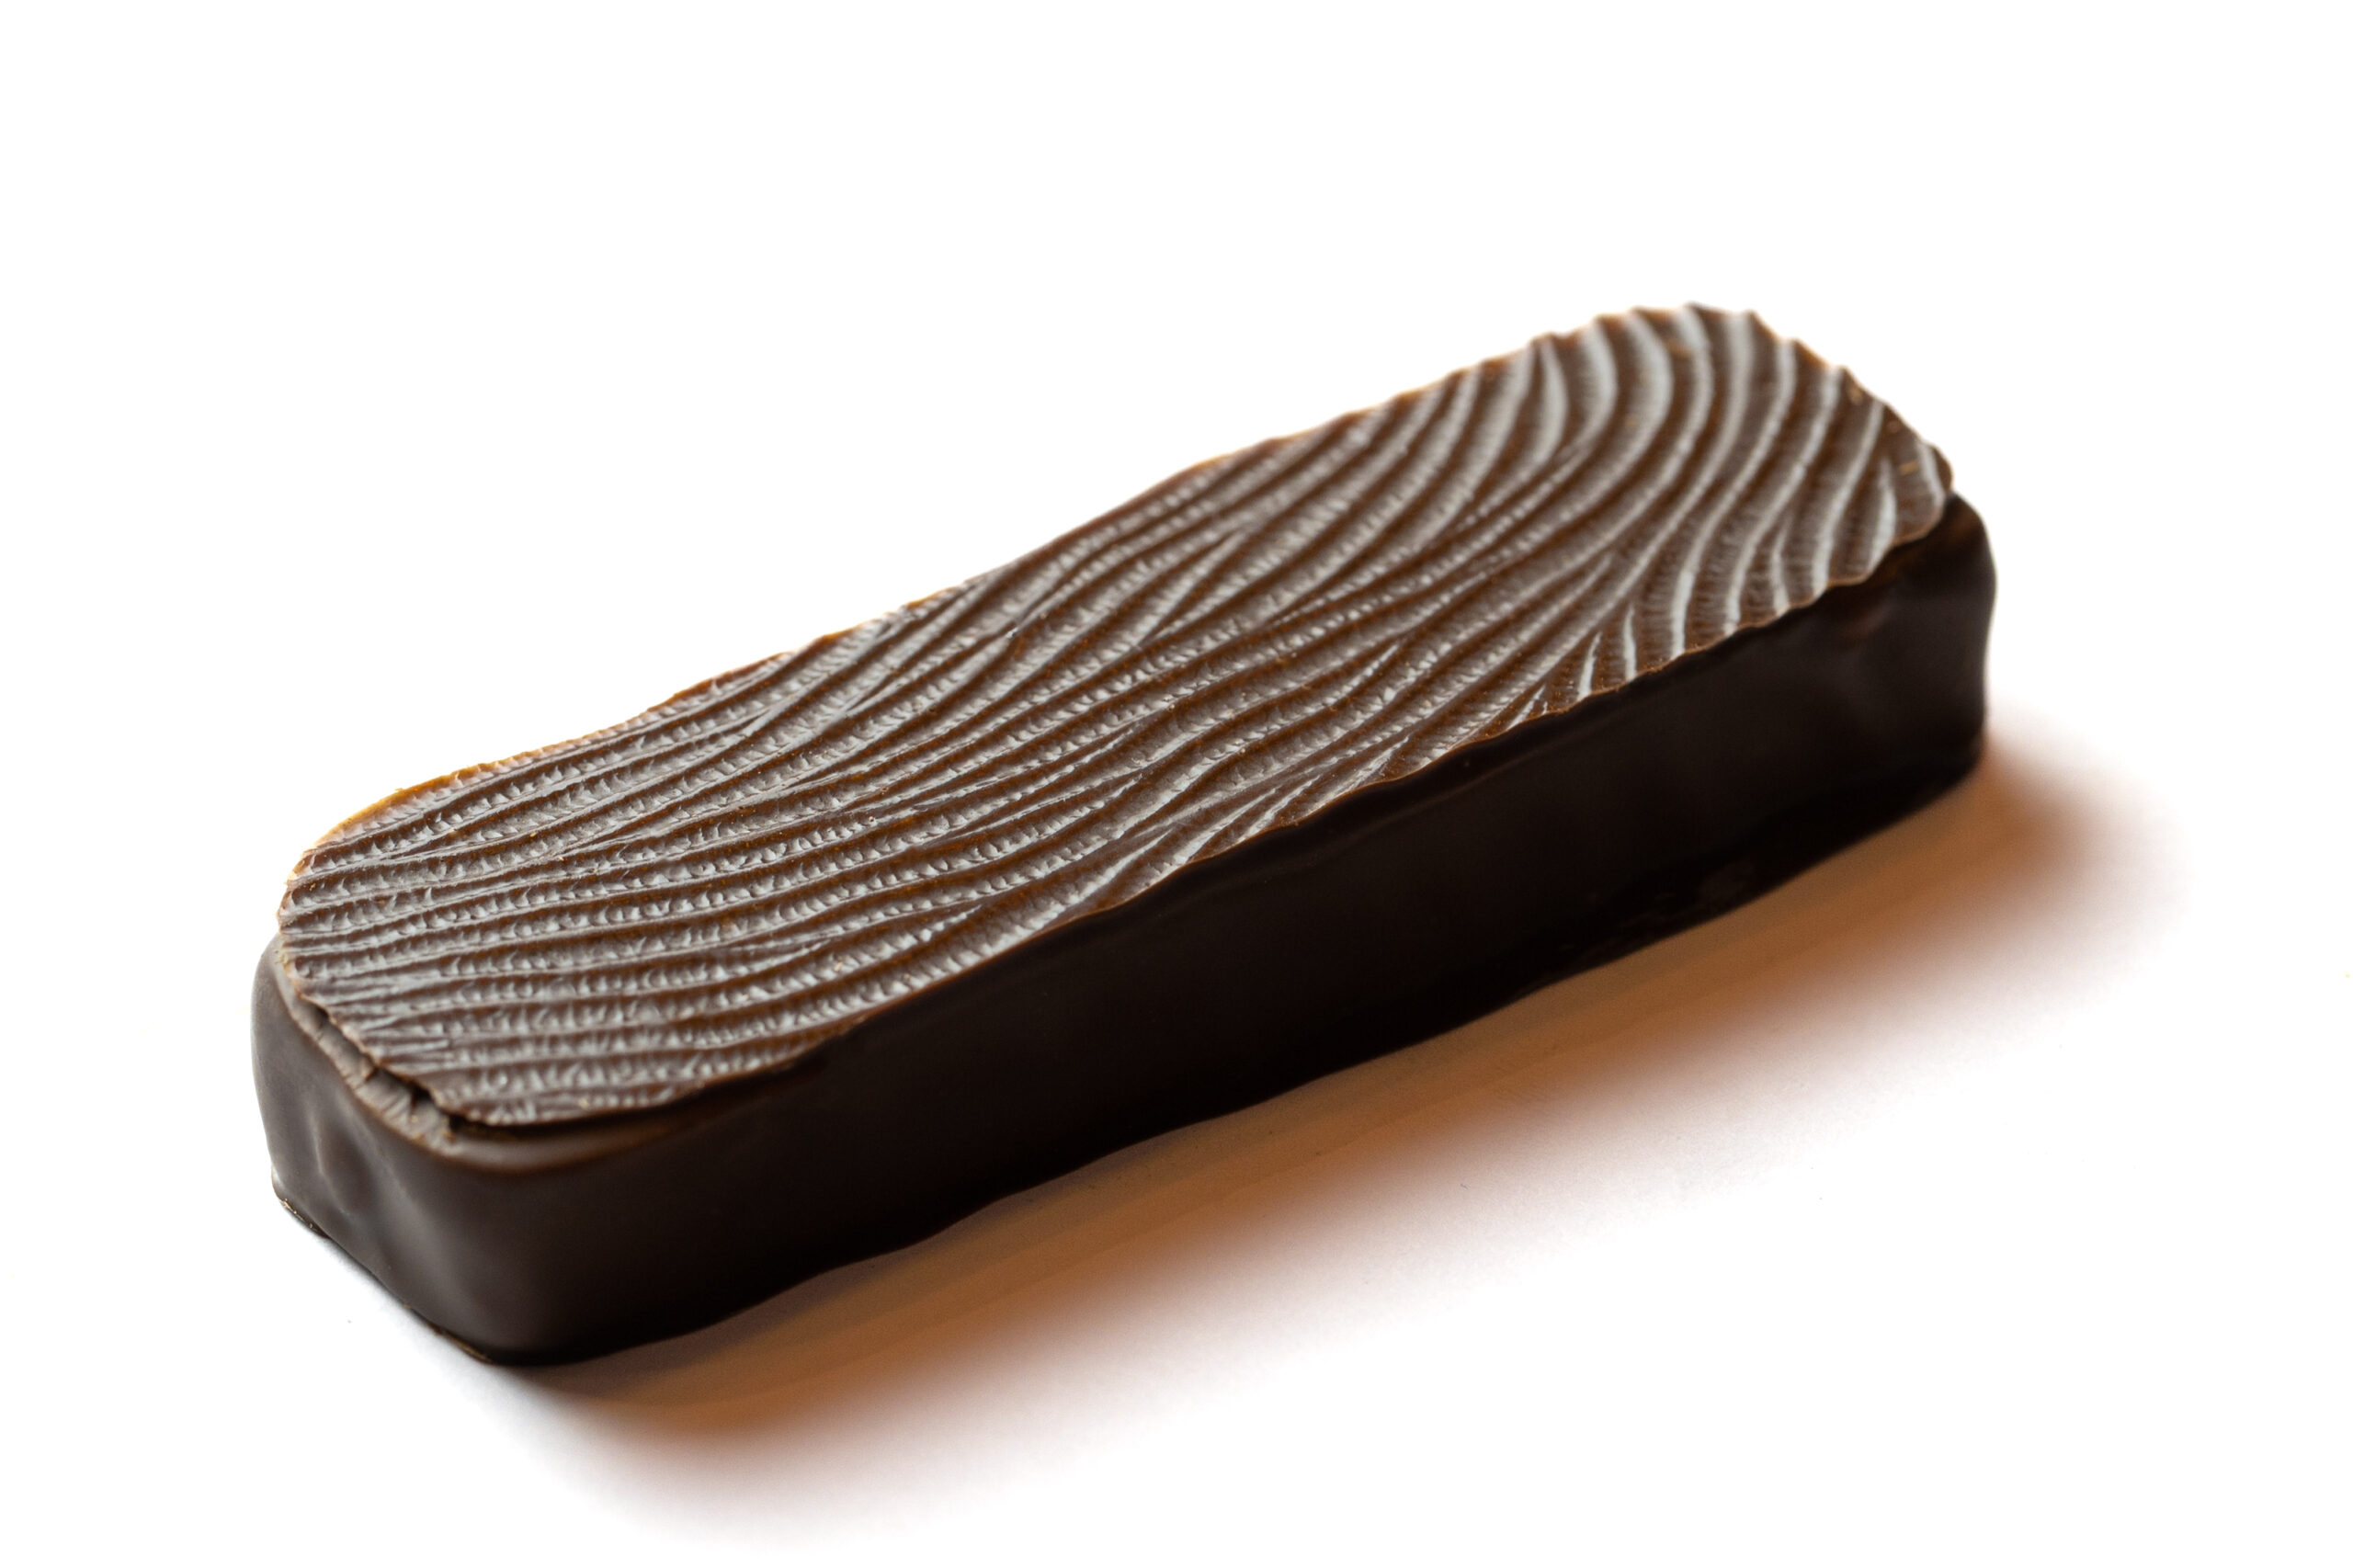 La malle a╠Ç chocolats - chocolats fond blanc-52